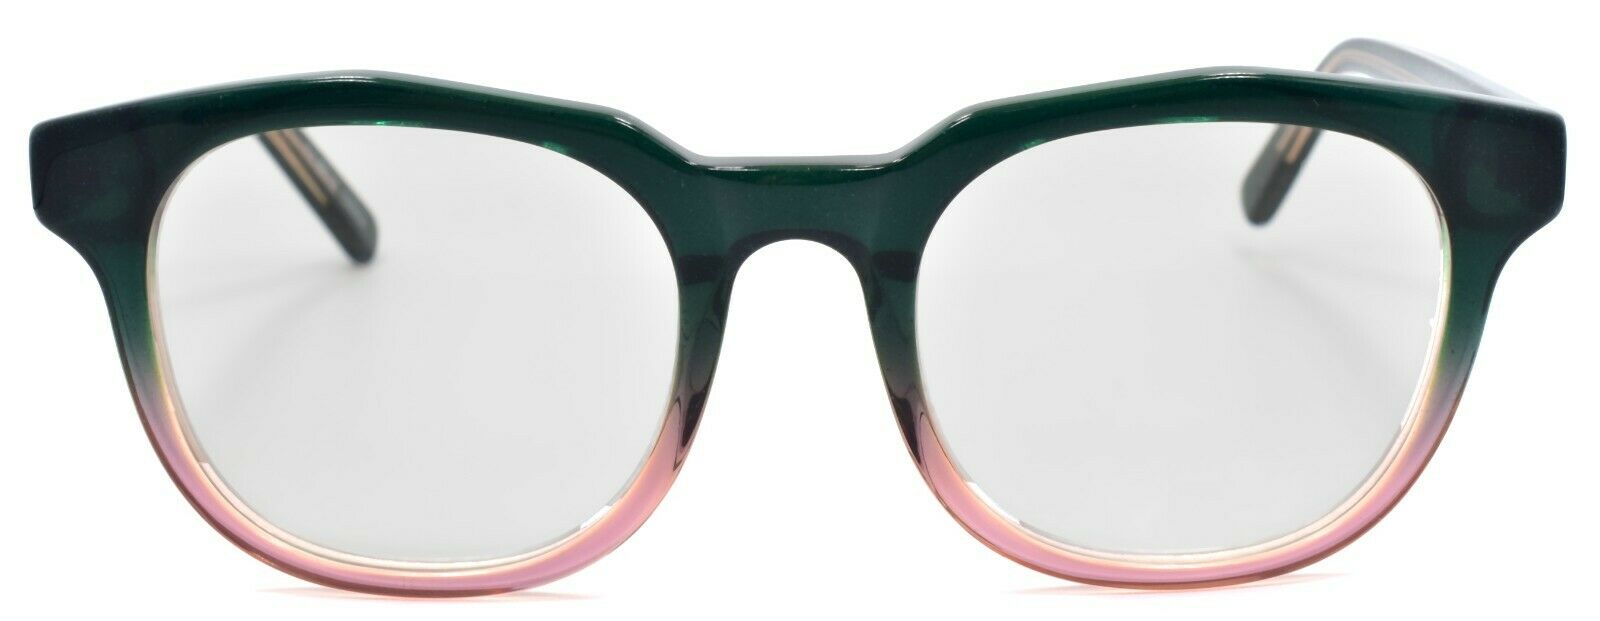 2-Eyebobs Befuddled 2702 26 Women's Reading Glasses Green / Purple +1.50-842754140942-IKSpecs